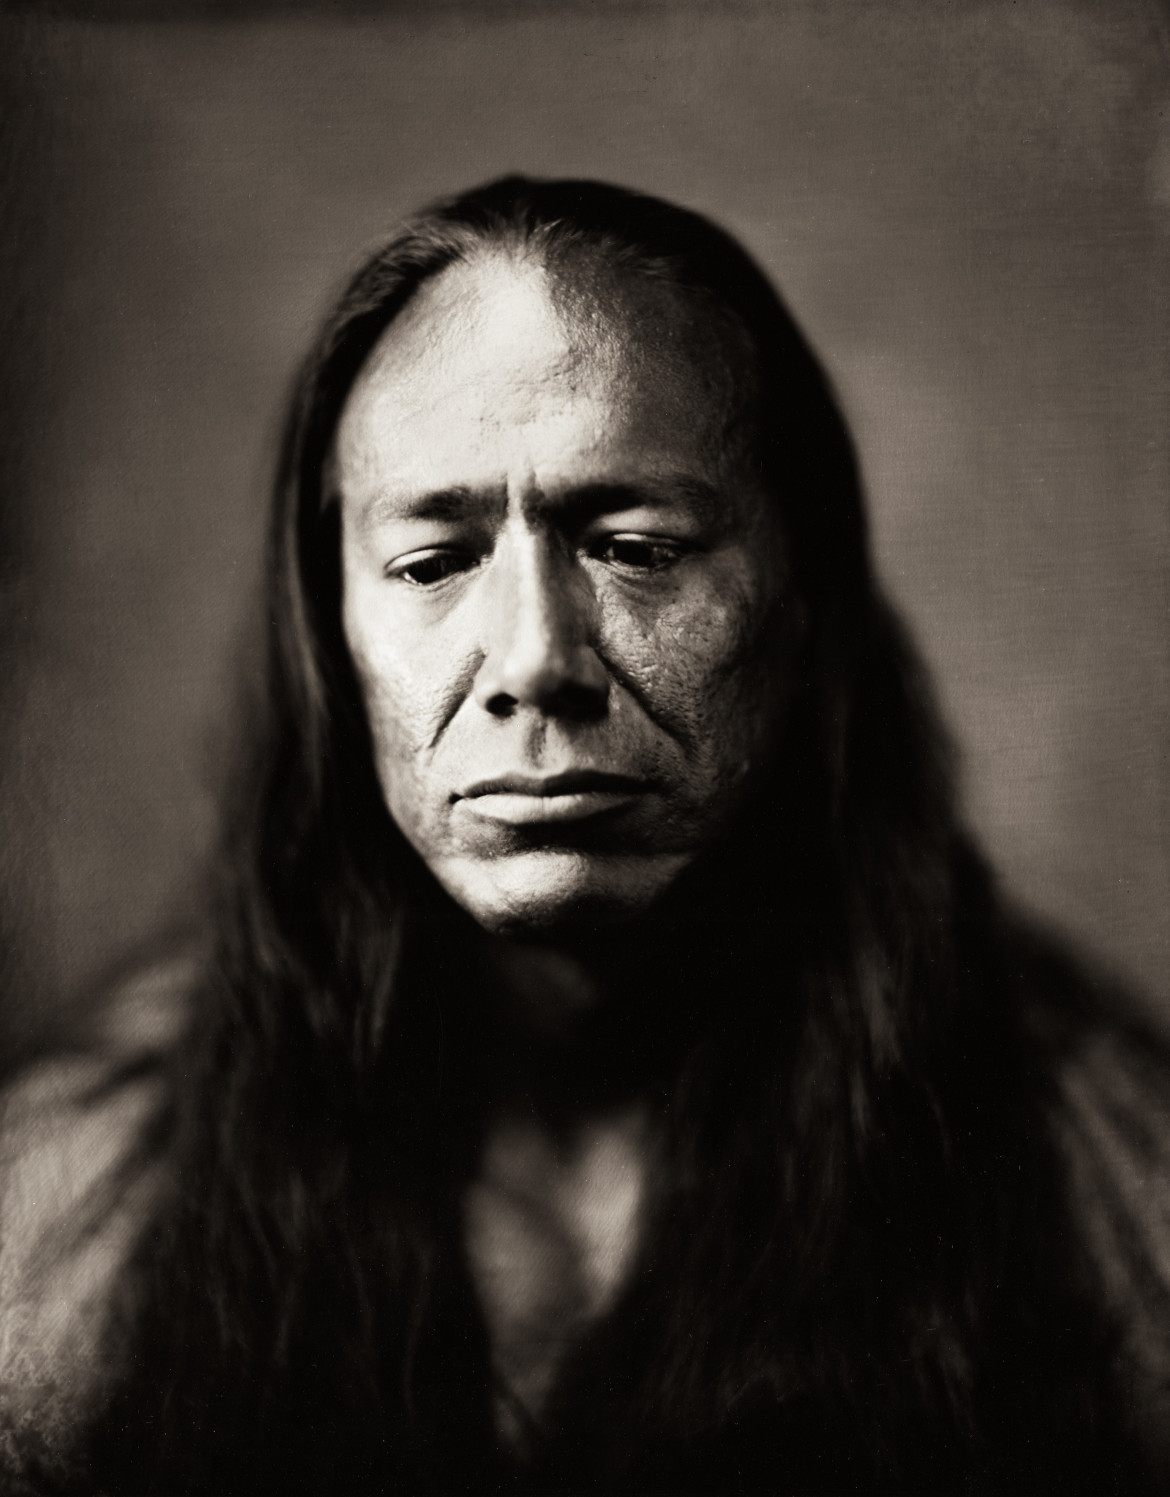 fot. Shane Balkowitsch, na zdjęciu Kory David Annis. Z projektu  Northern Plains Native Americans: A Modern Wet Plate Perspective